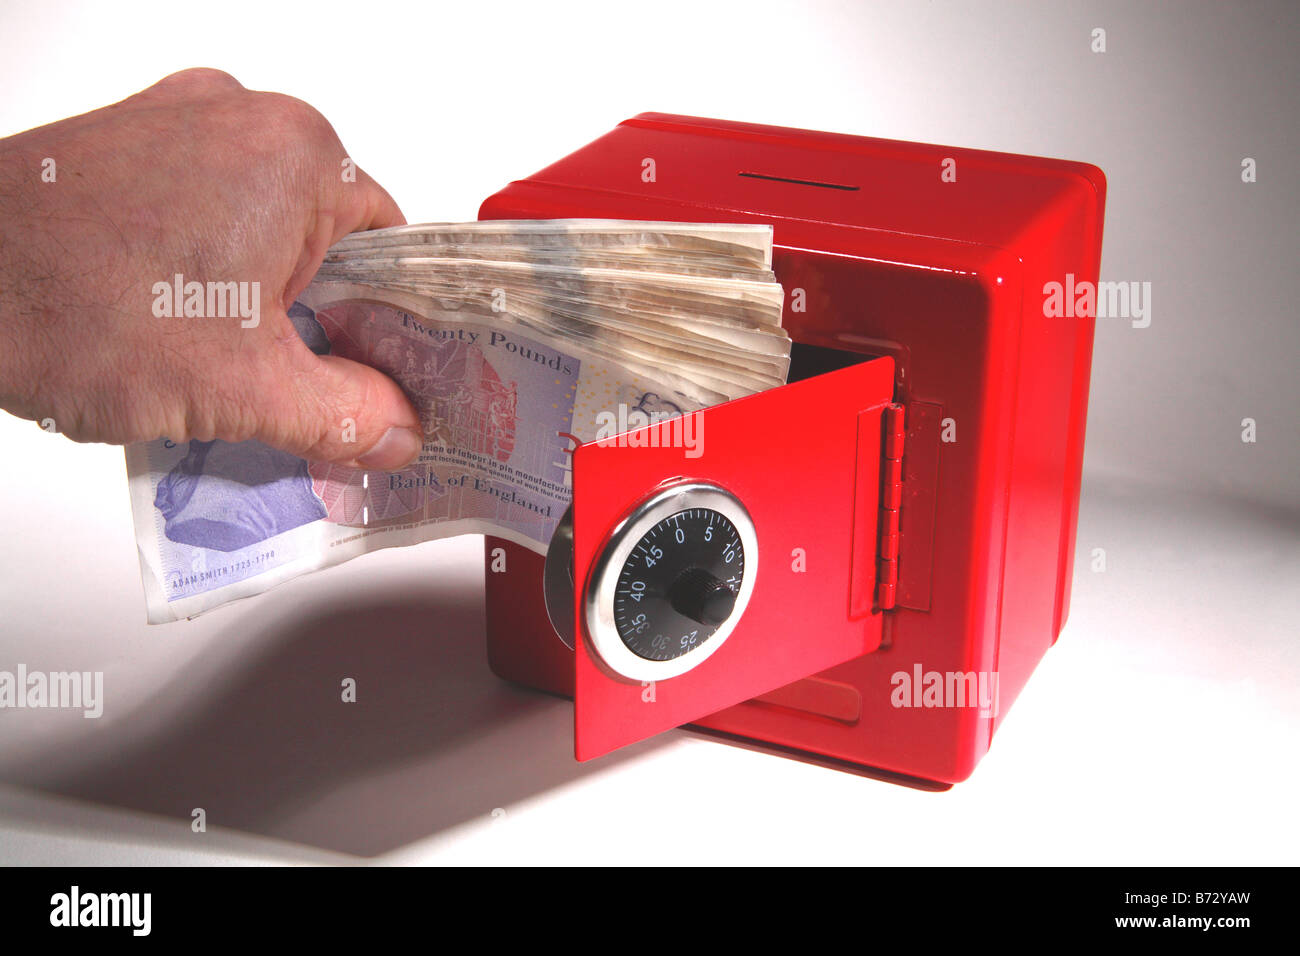 https://c8.alamy.com/comp/B72YAW/red-safe-cash-money-combination-credit-crunch-keeping-box-bank-saving-B72YAW.jpg